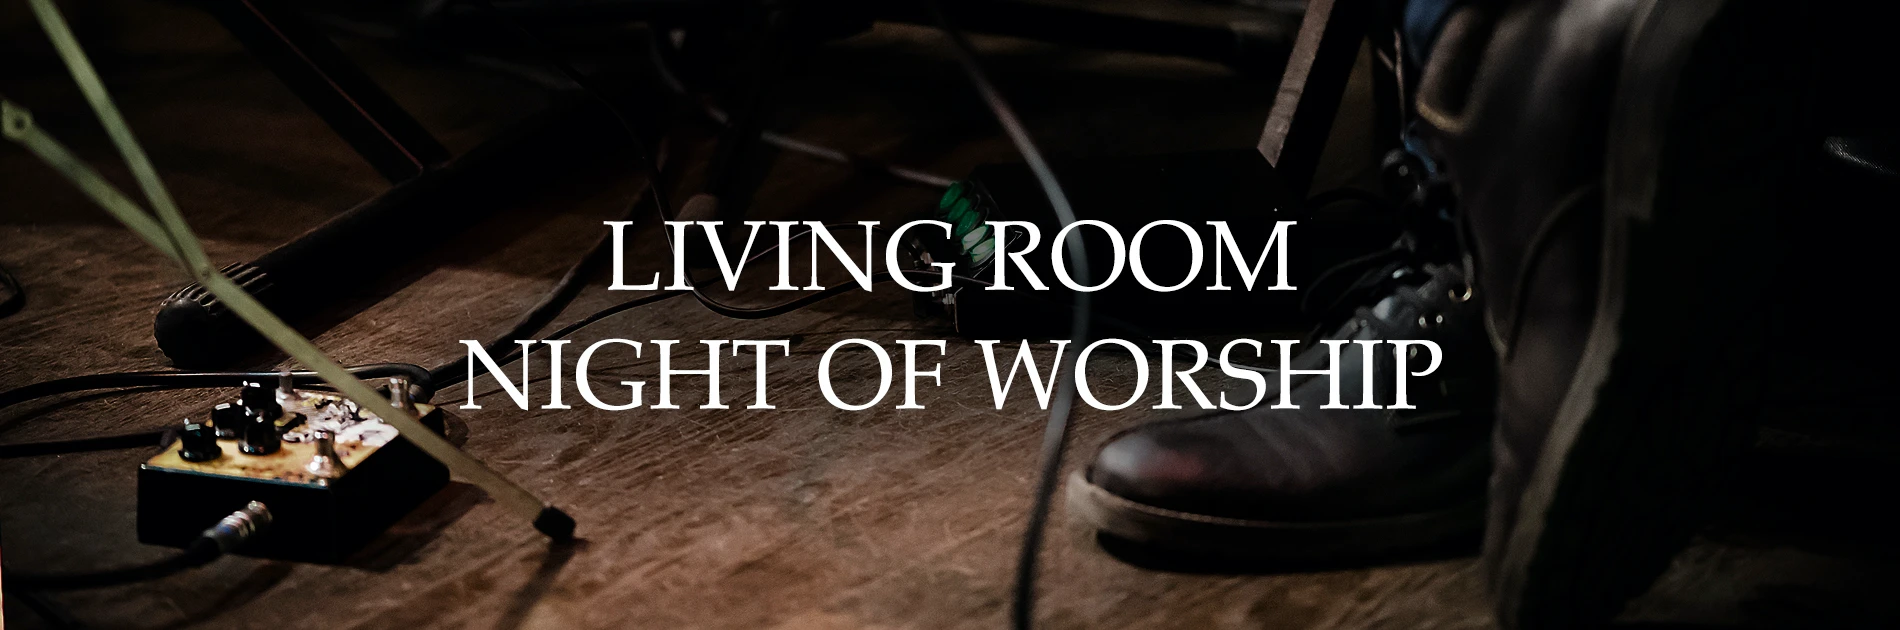 Living Room Night of Worship